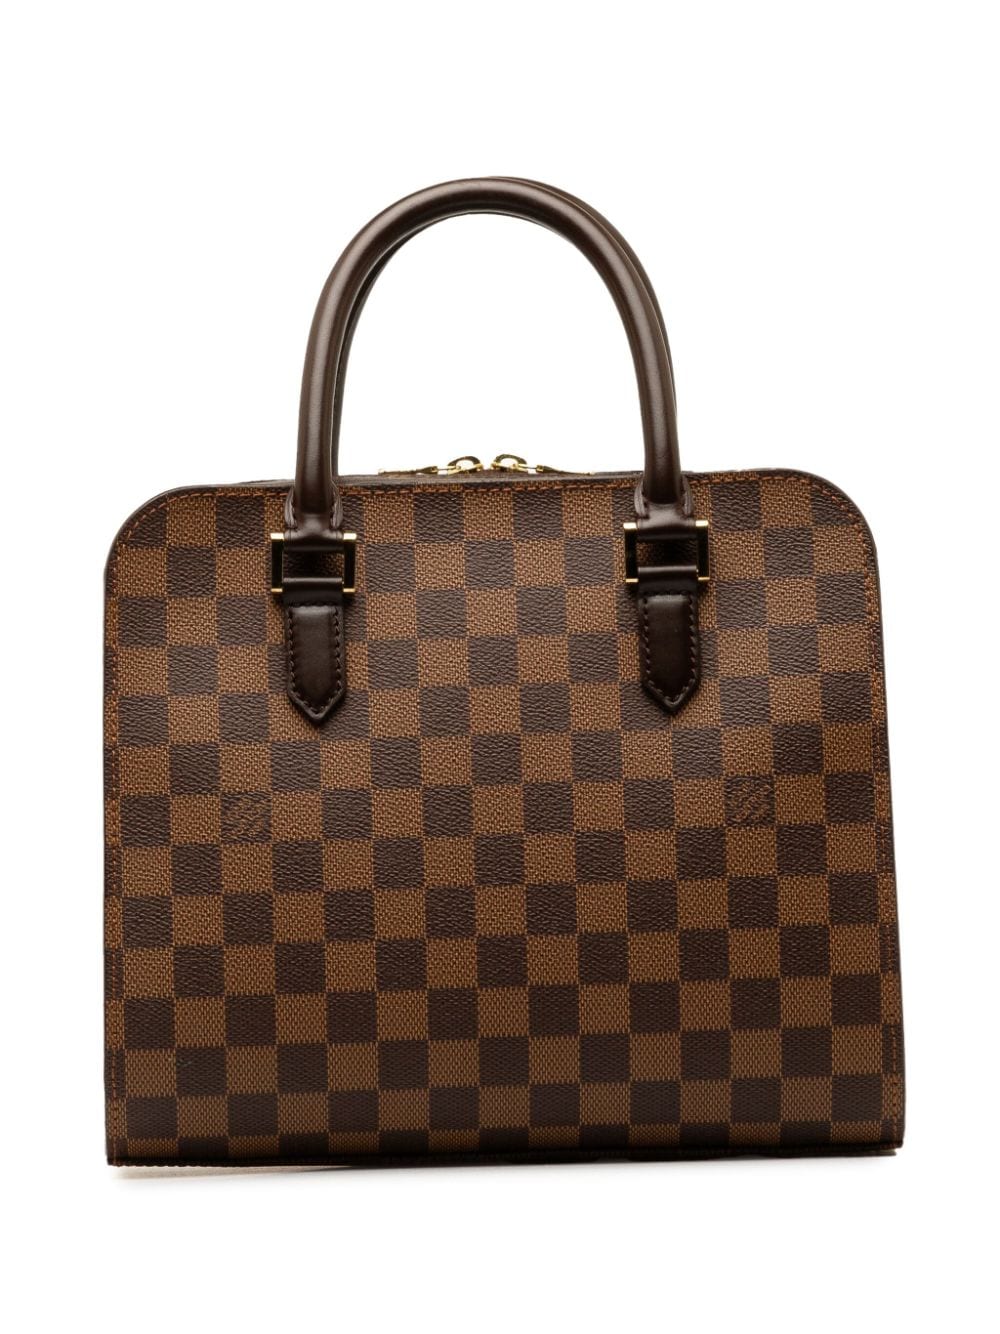 Louis Vuitton Pre-Owned 1998 Damier Ebene Triana handbag - Bruin